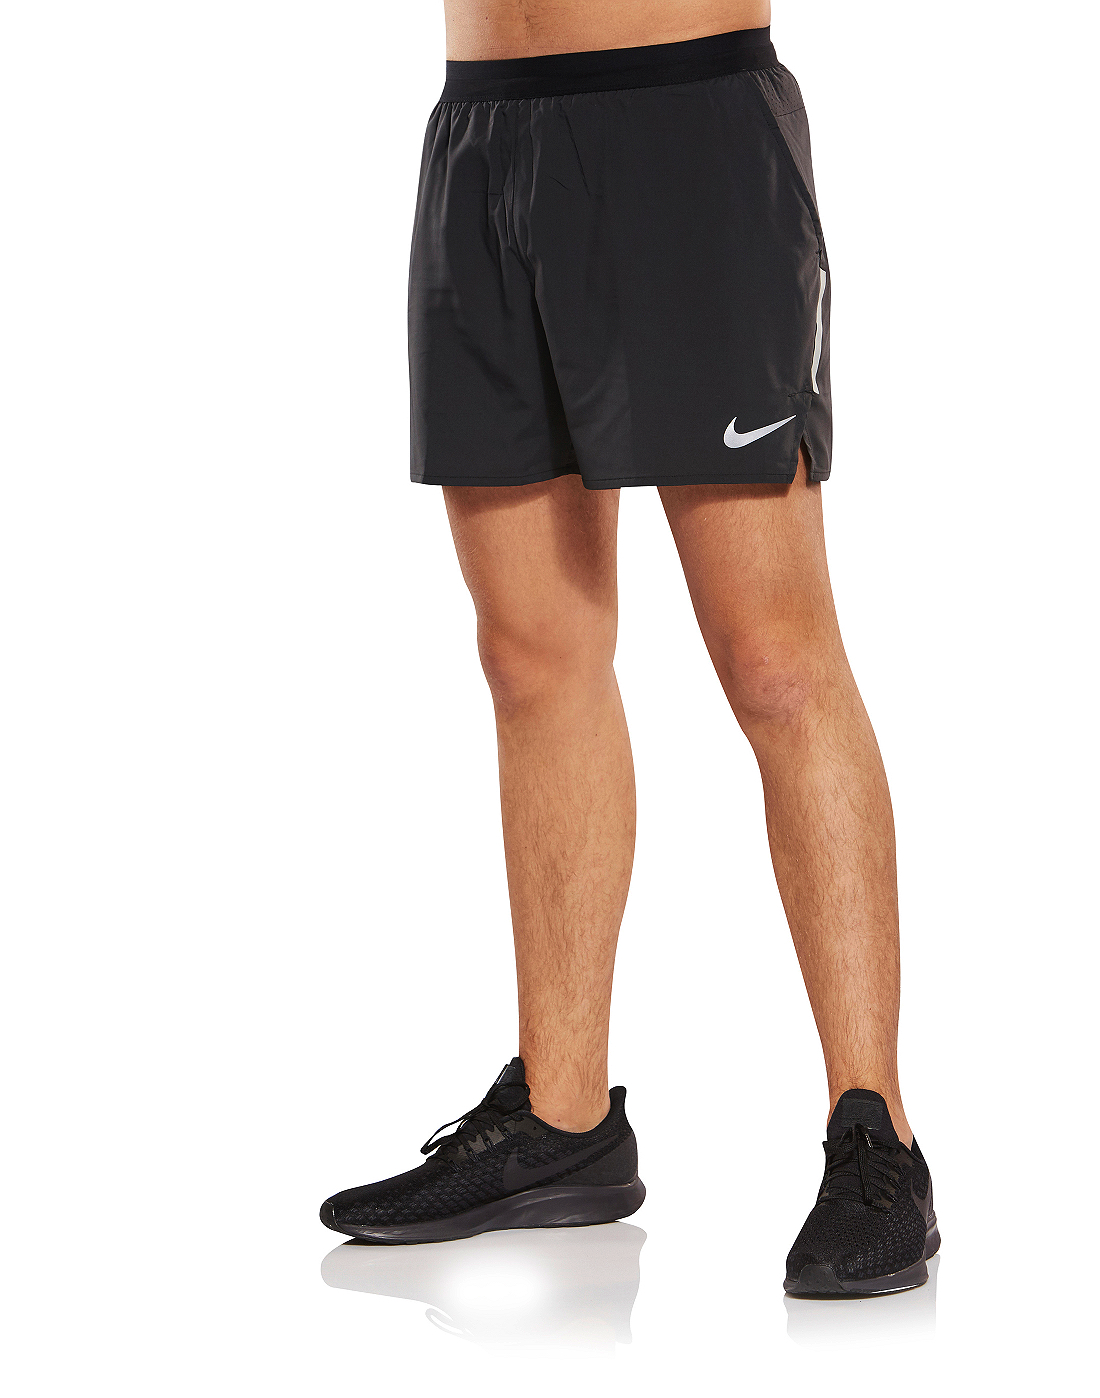 adidas men's running shorts 5 inch inseam